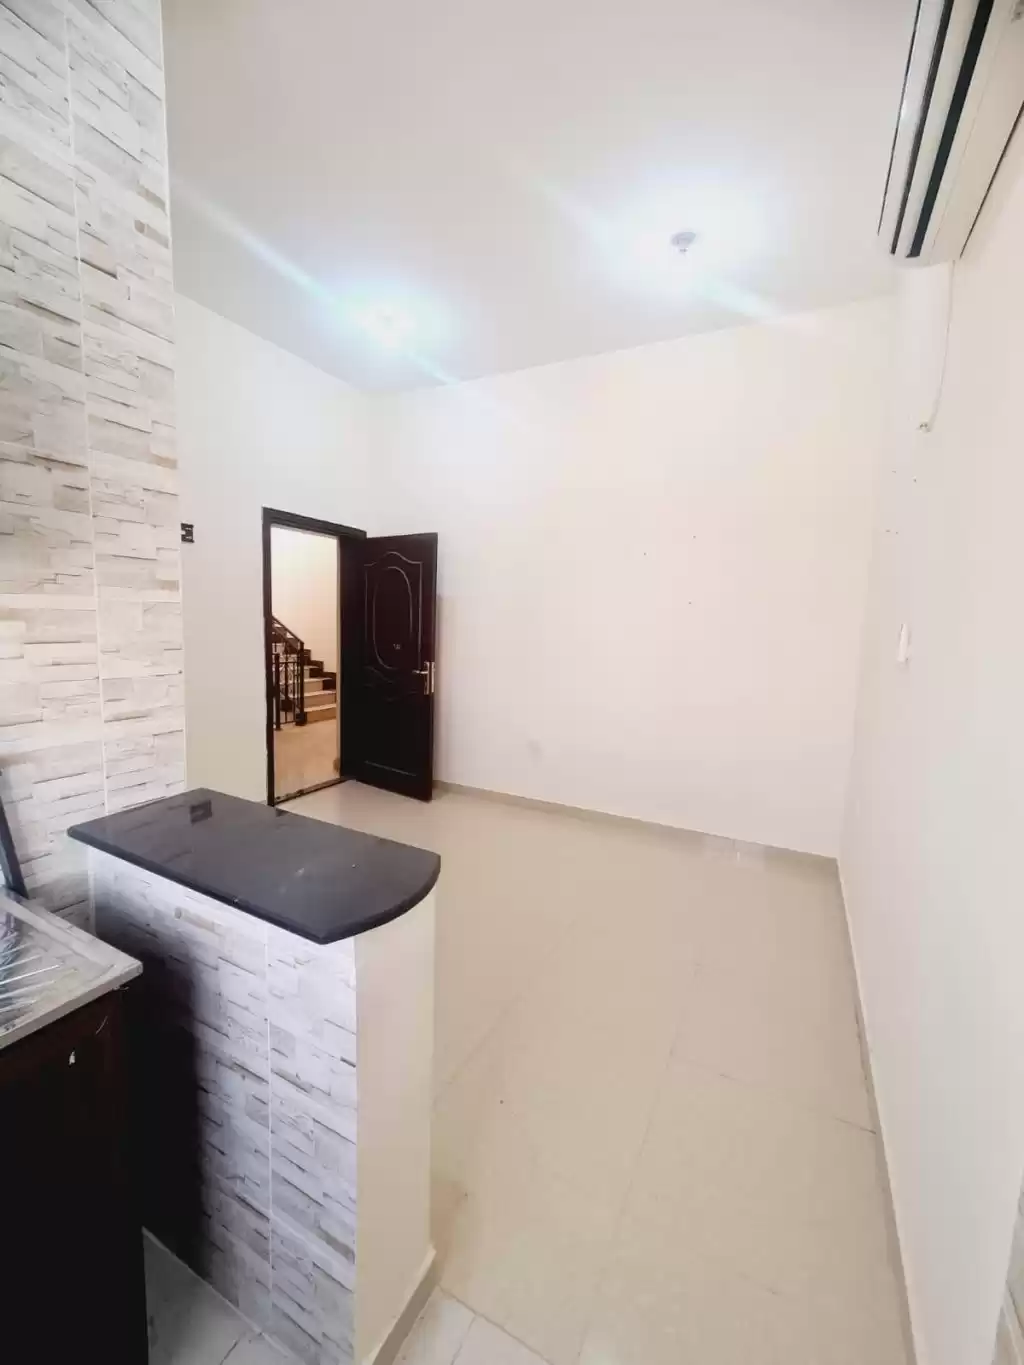 Résidentiel Propriété prête Studio U / f Appartement  a louer au Al-Sadd , Doha #15524 - 1  image 